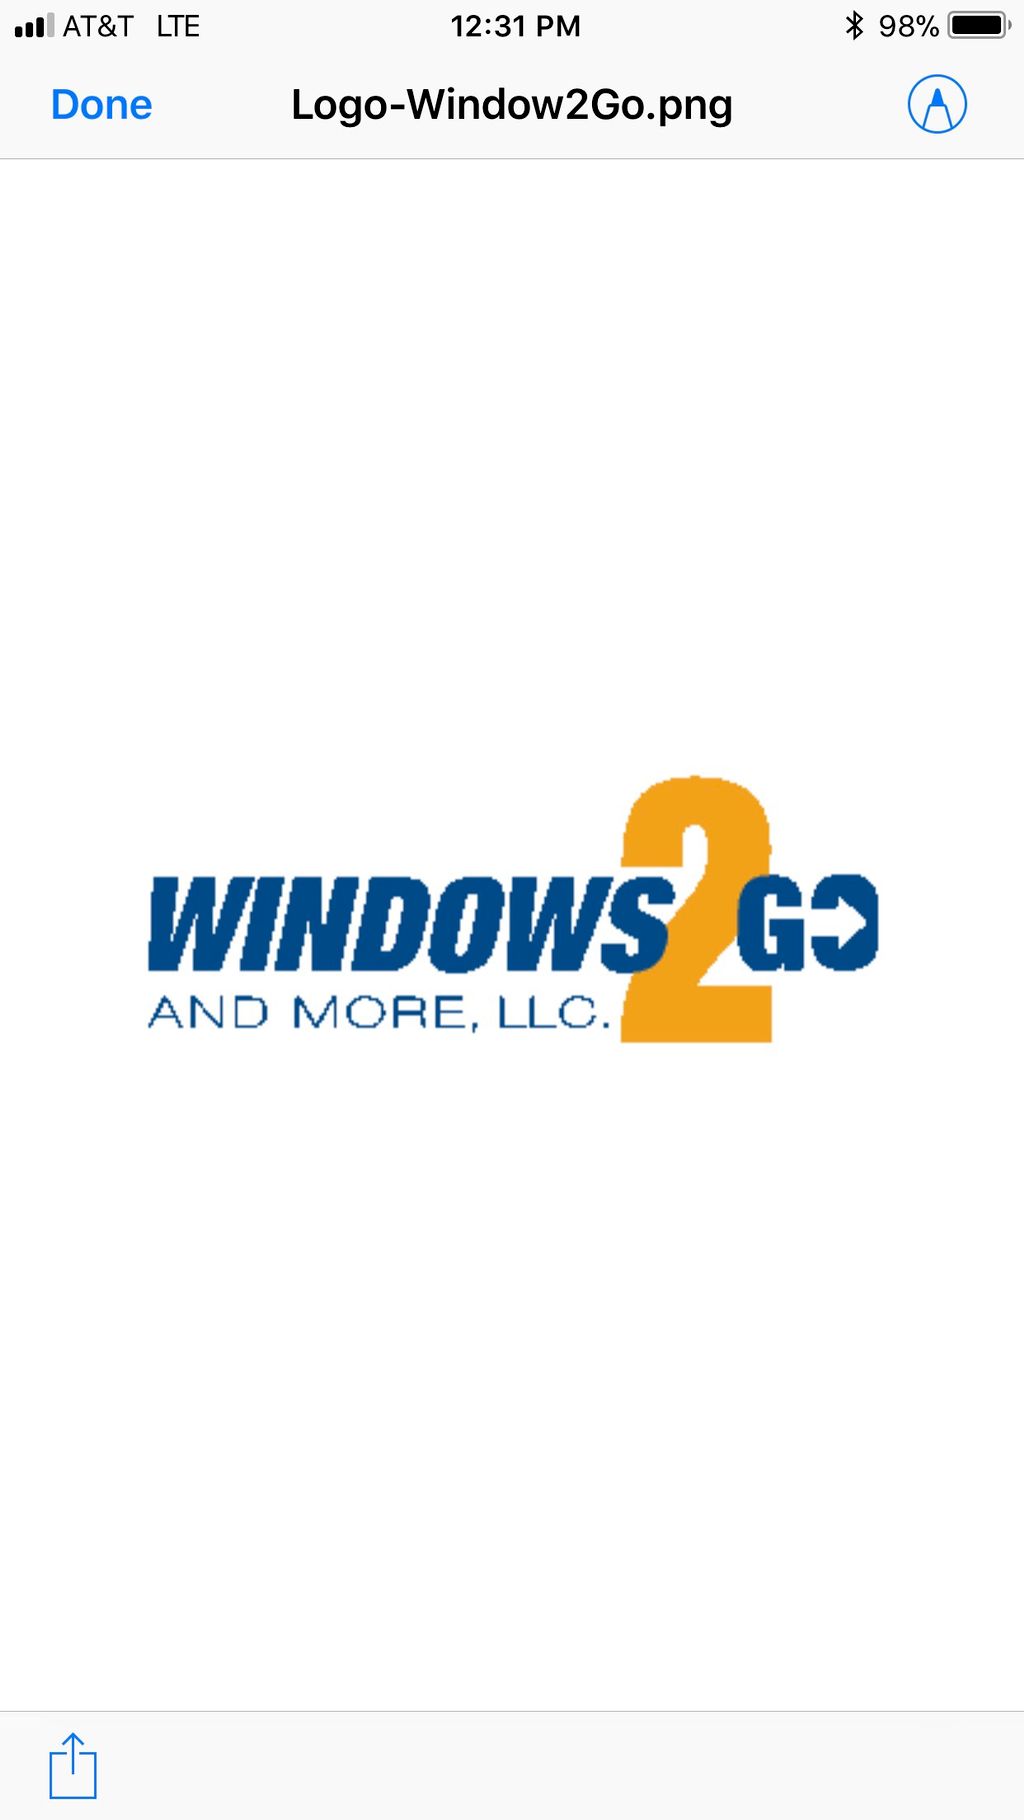 Windows 2 Go And More, LLC.